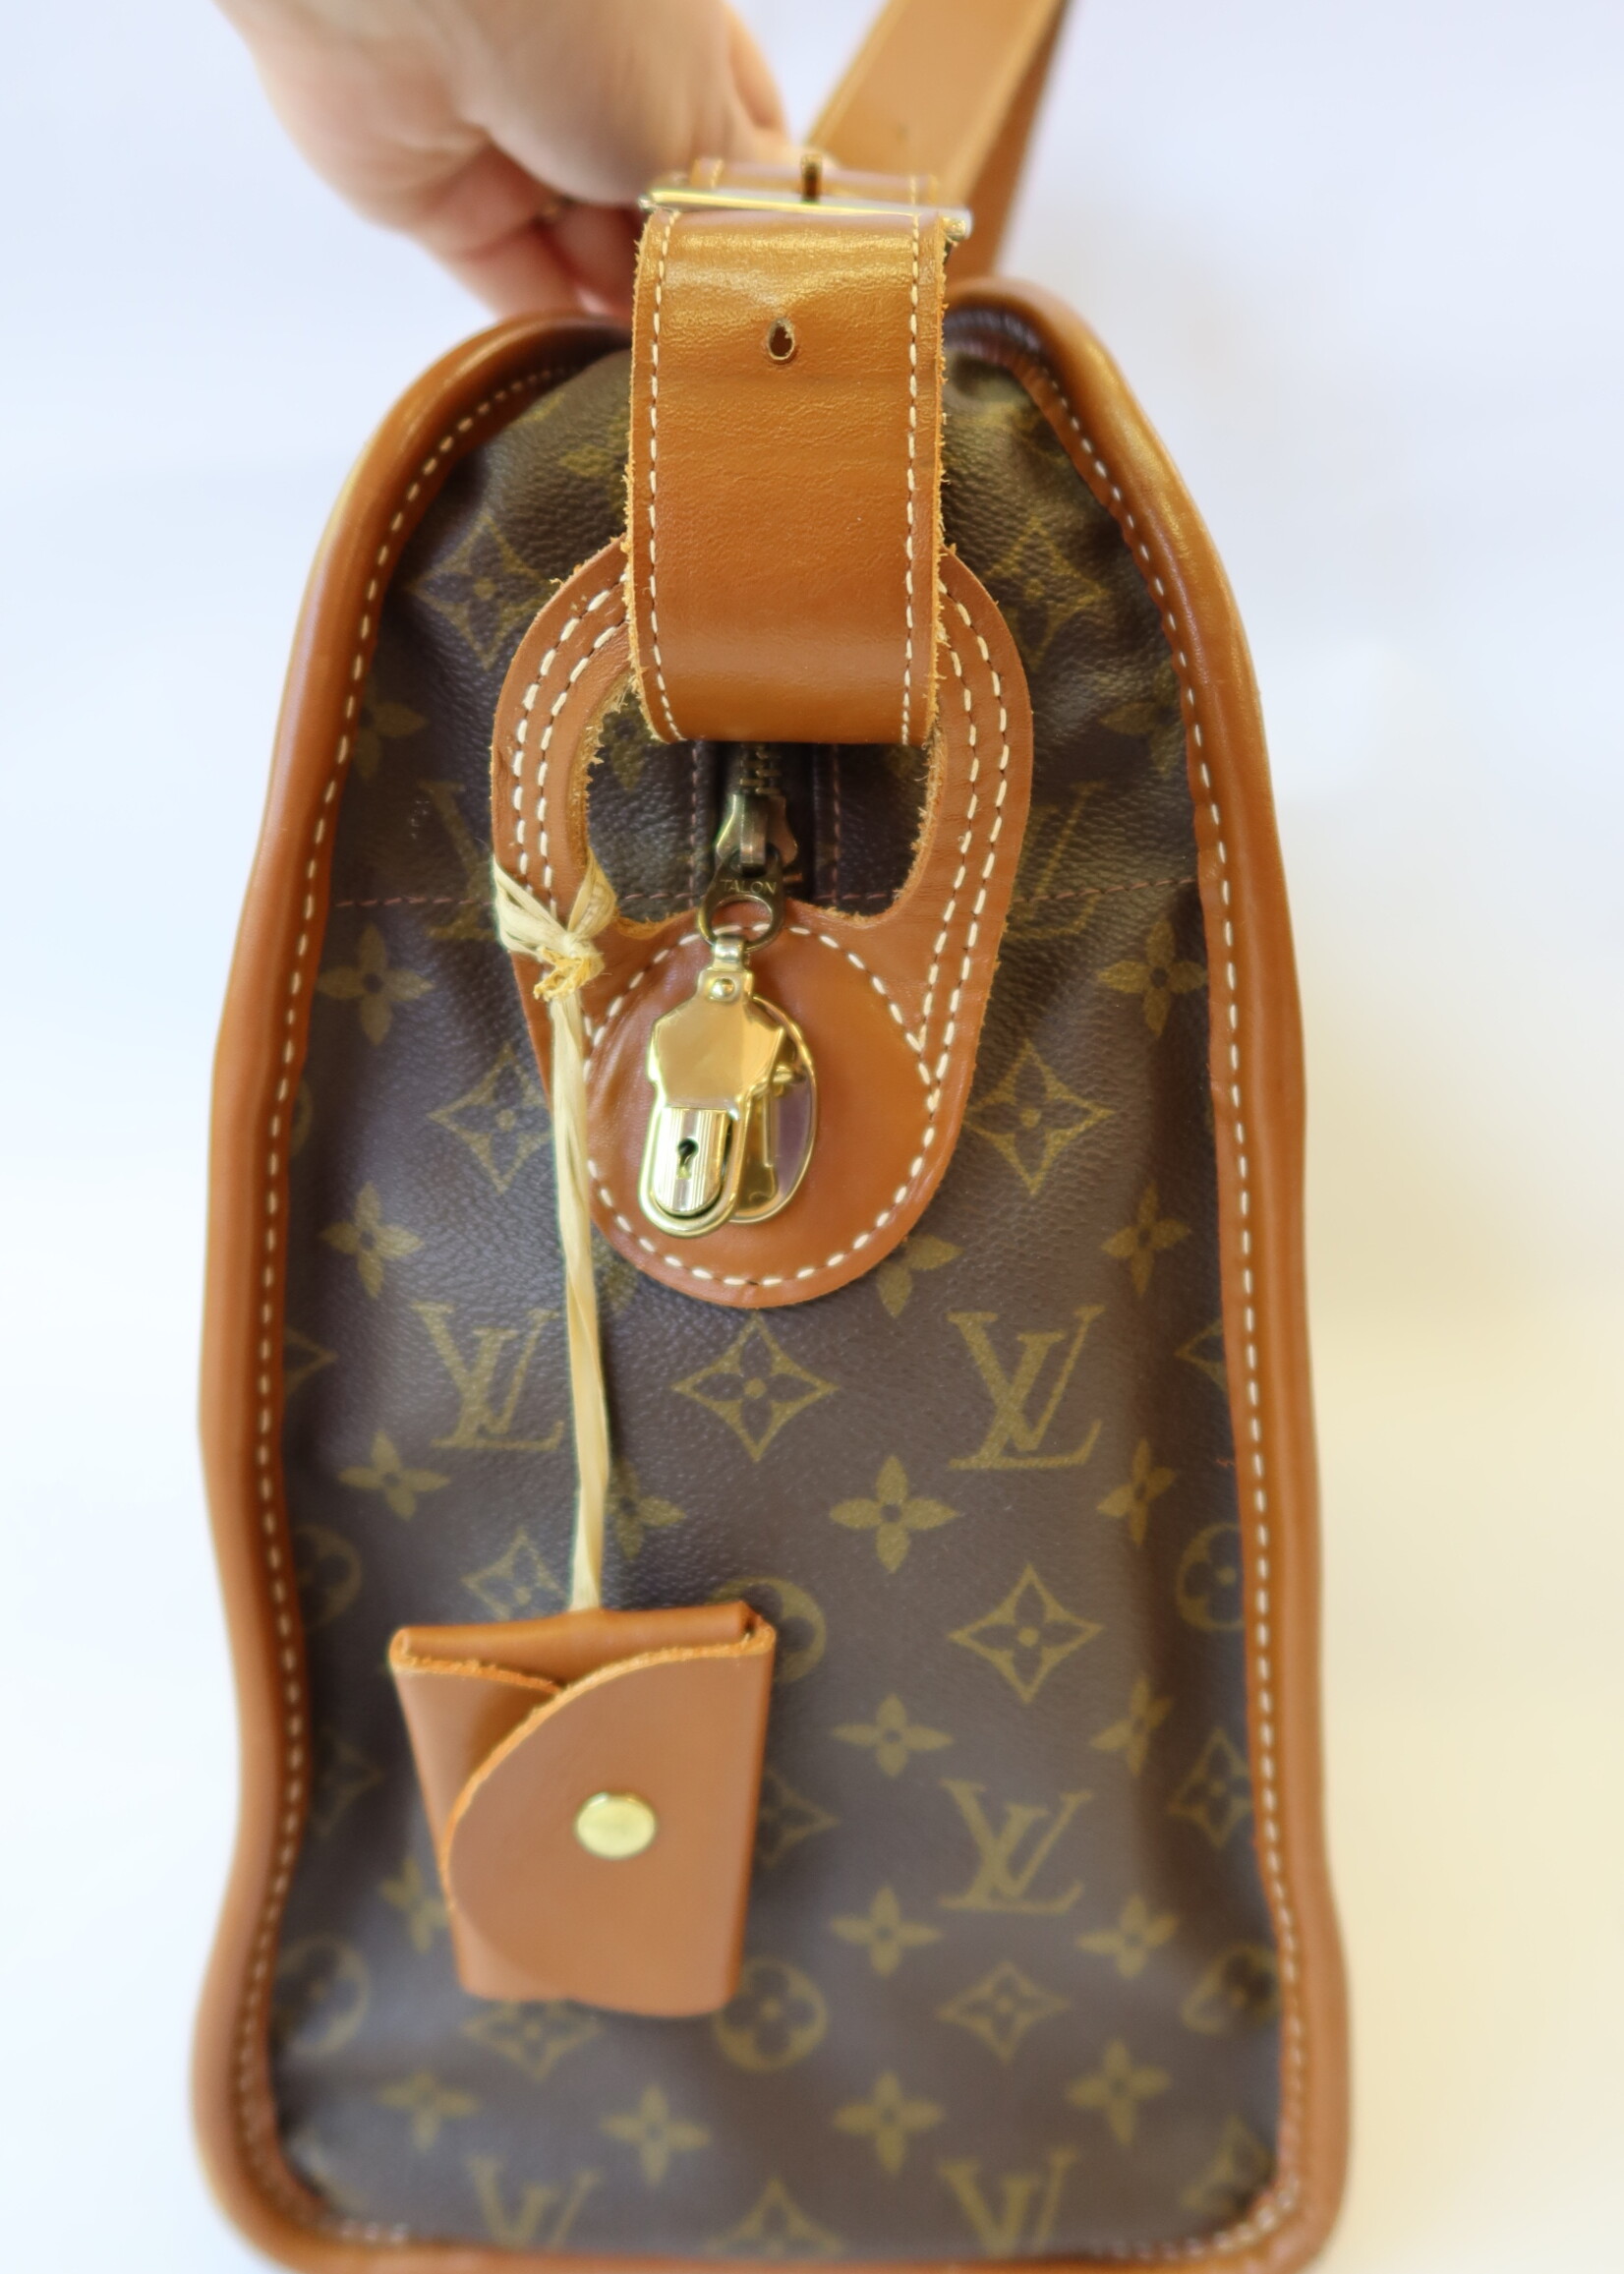 Vintage Louis Vuitton Monogram Travel Bag